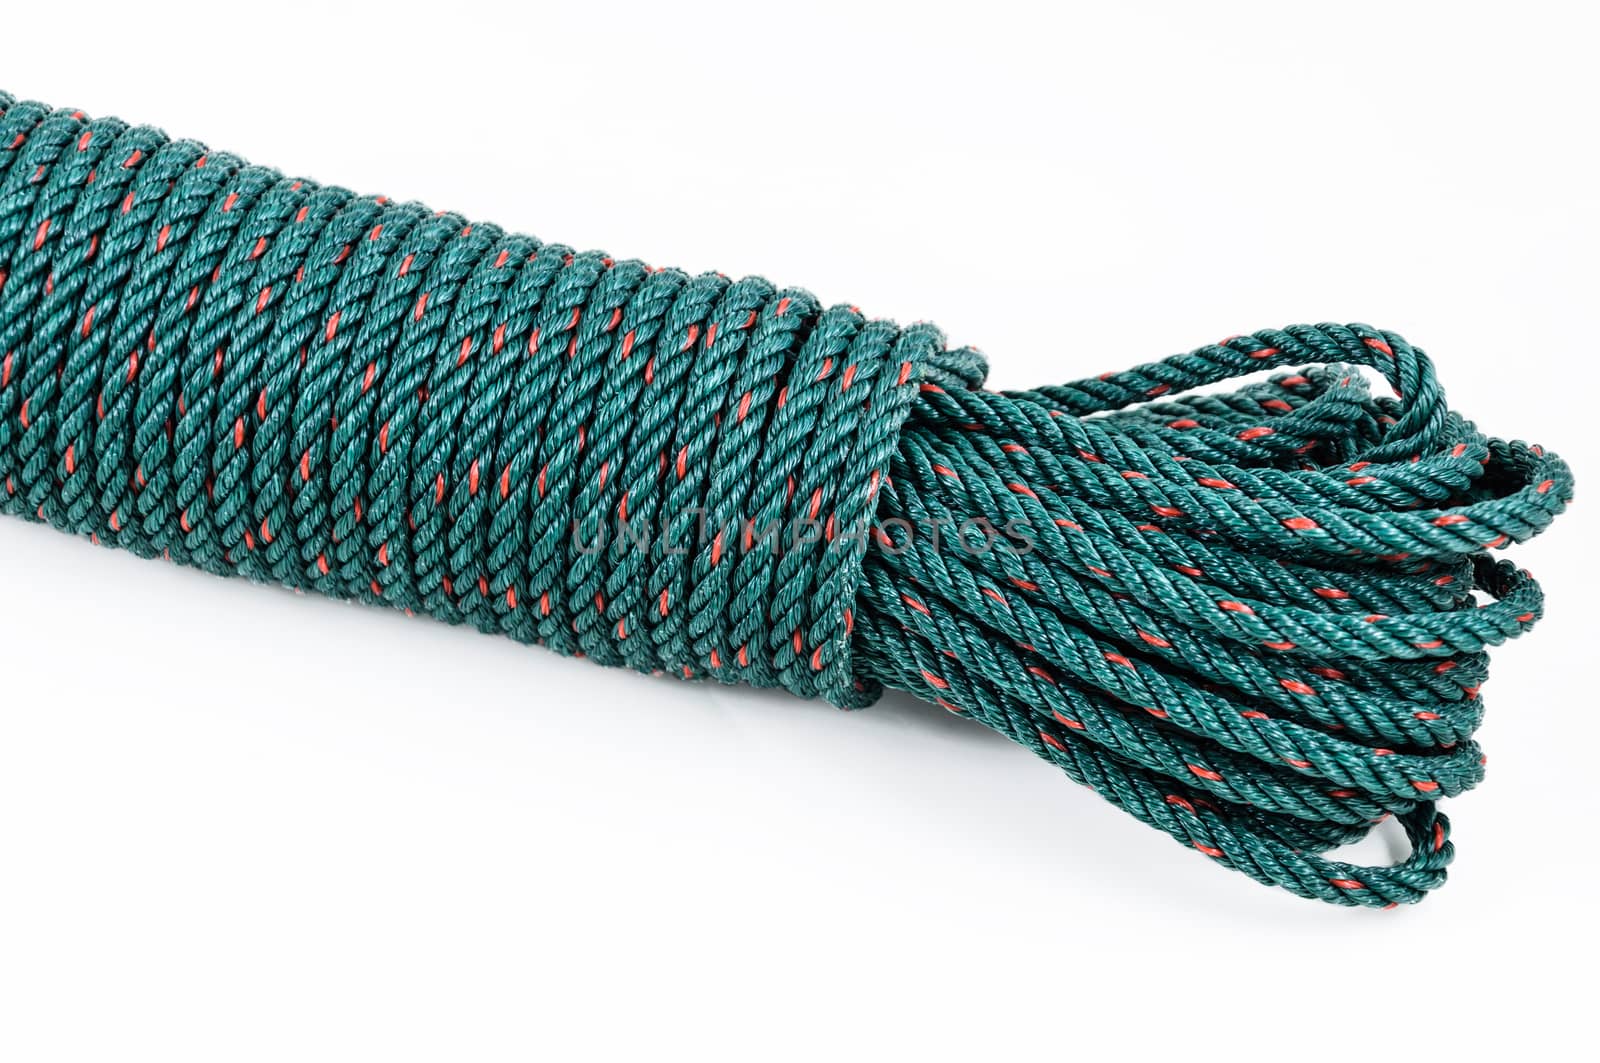 Green nylon rope by NuwatPhoto